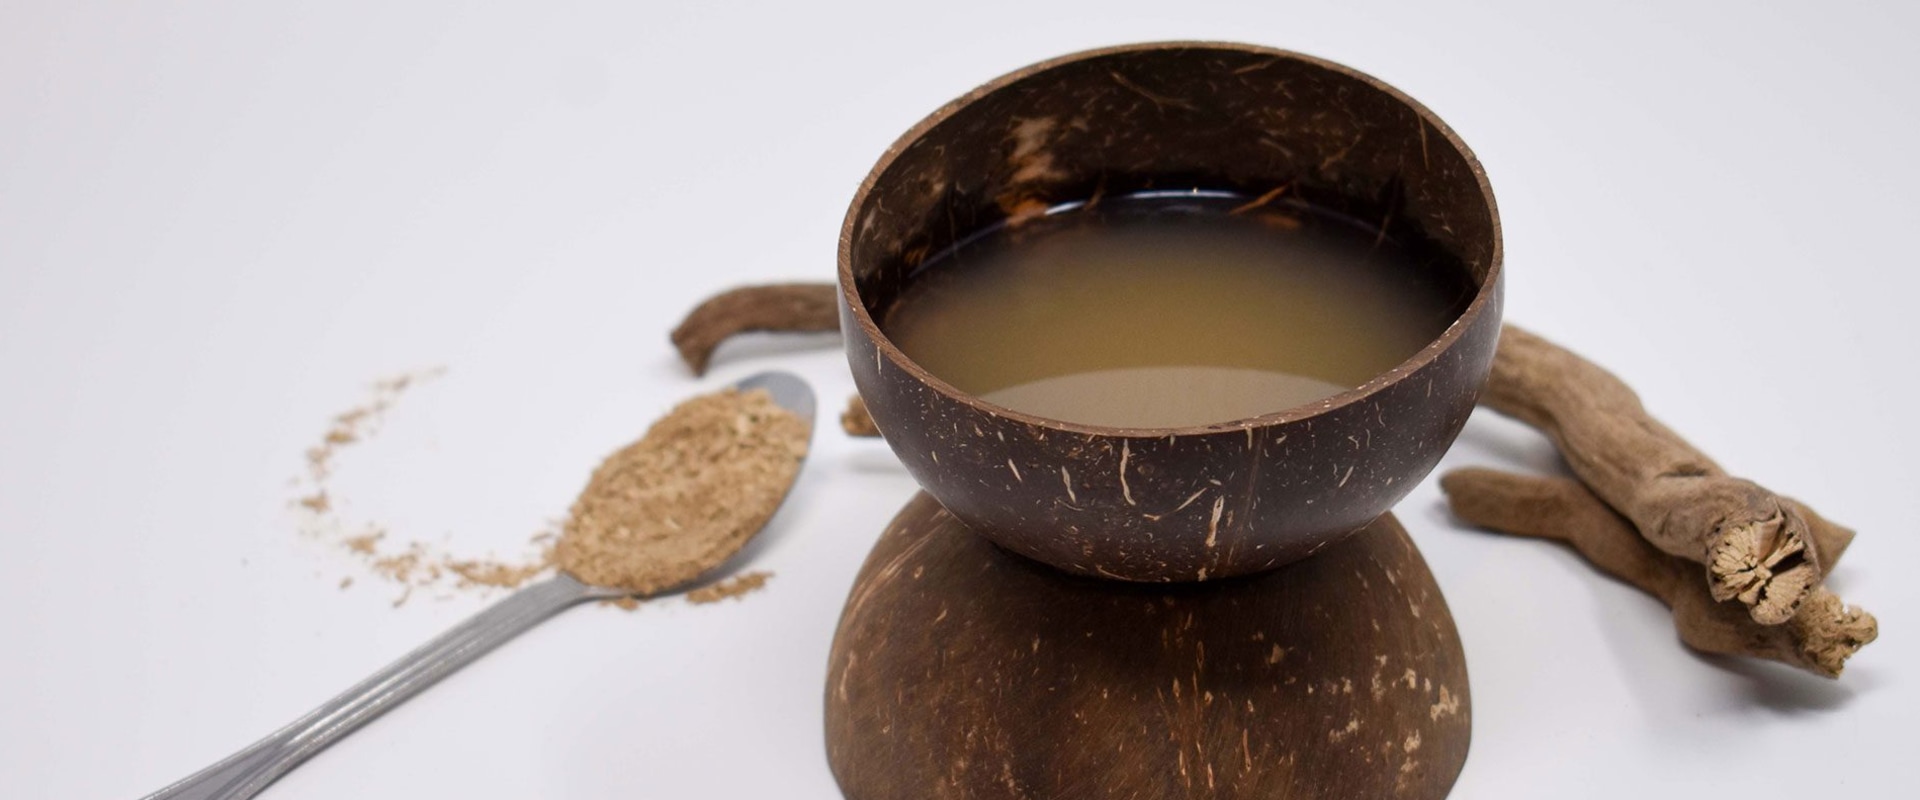 The Potency and Effects of Hawaiian Kava Root: Fresh vs Dried